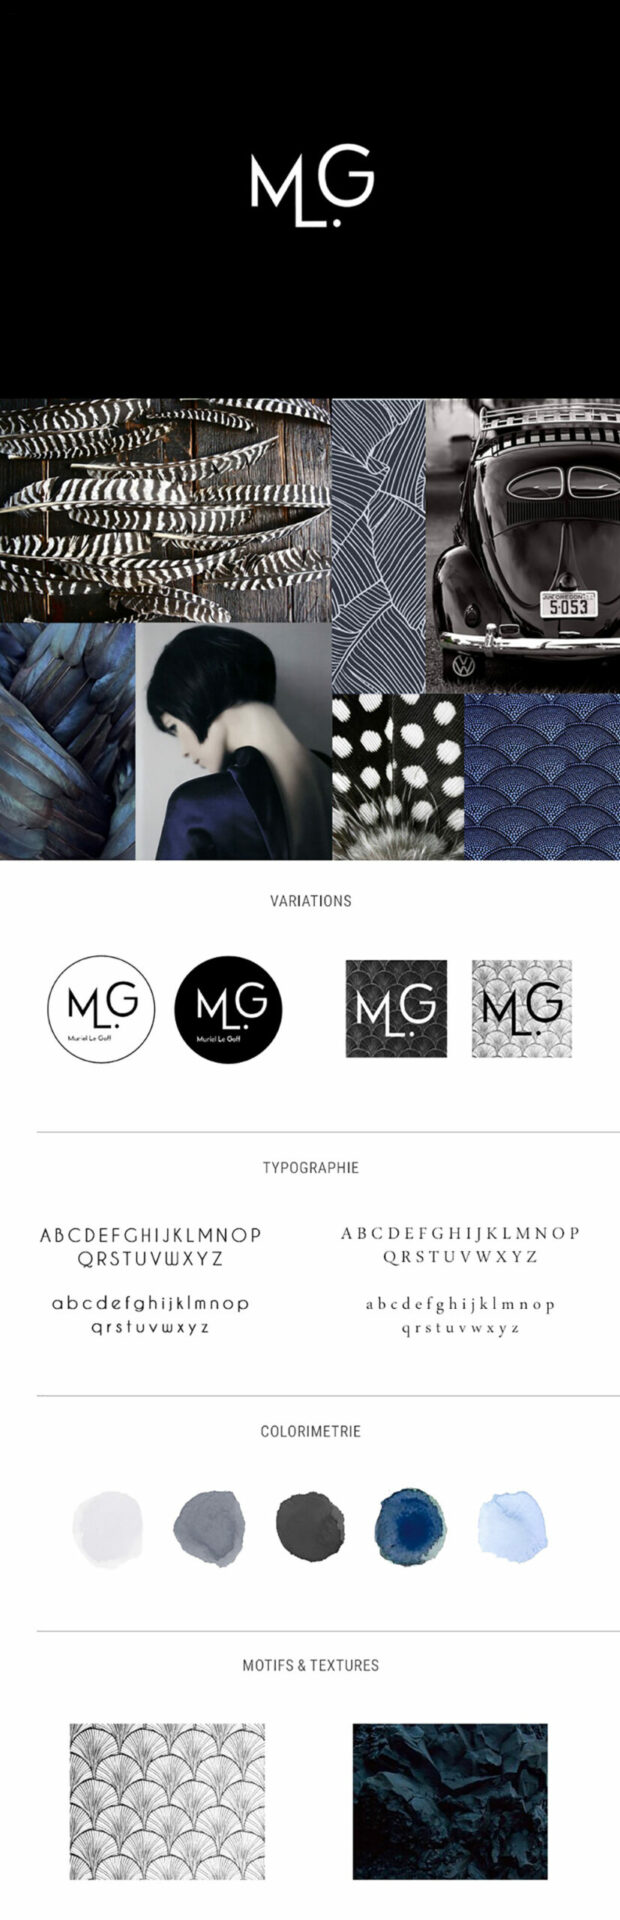 branding MLG moodboard